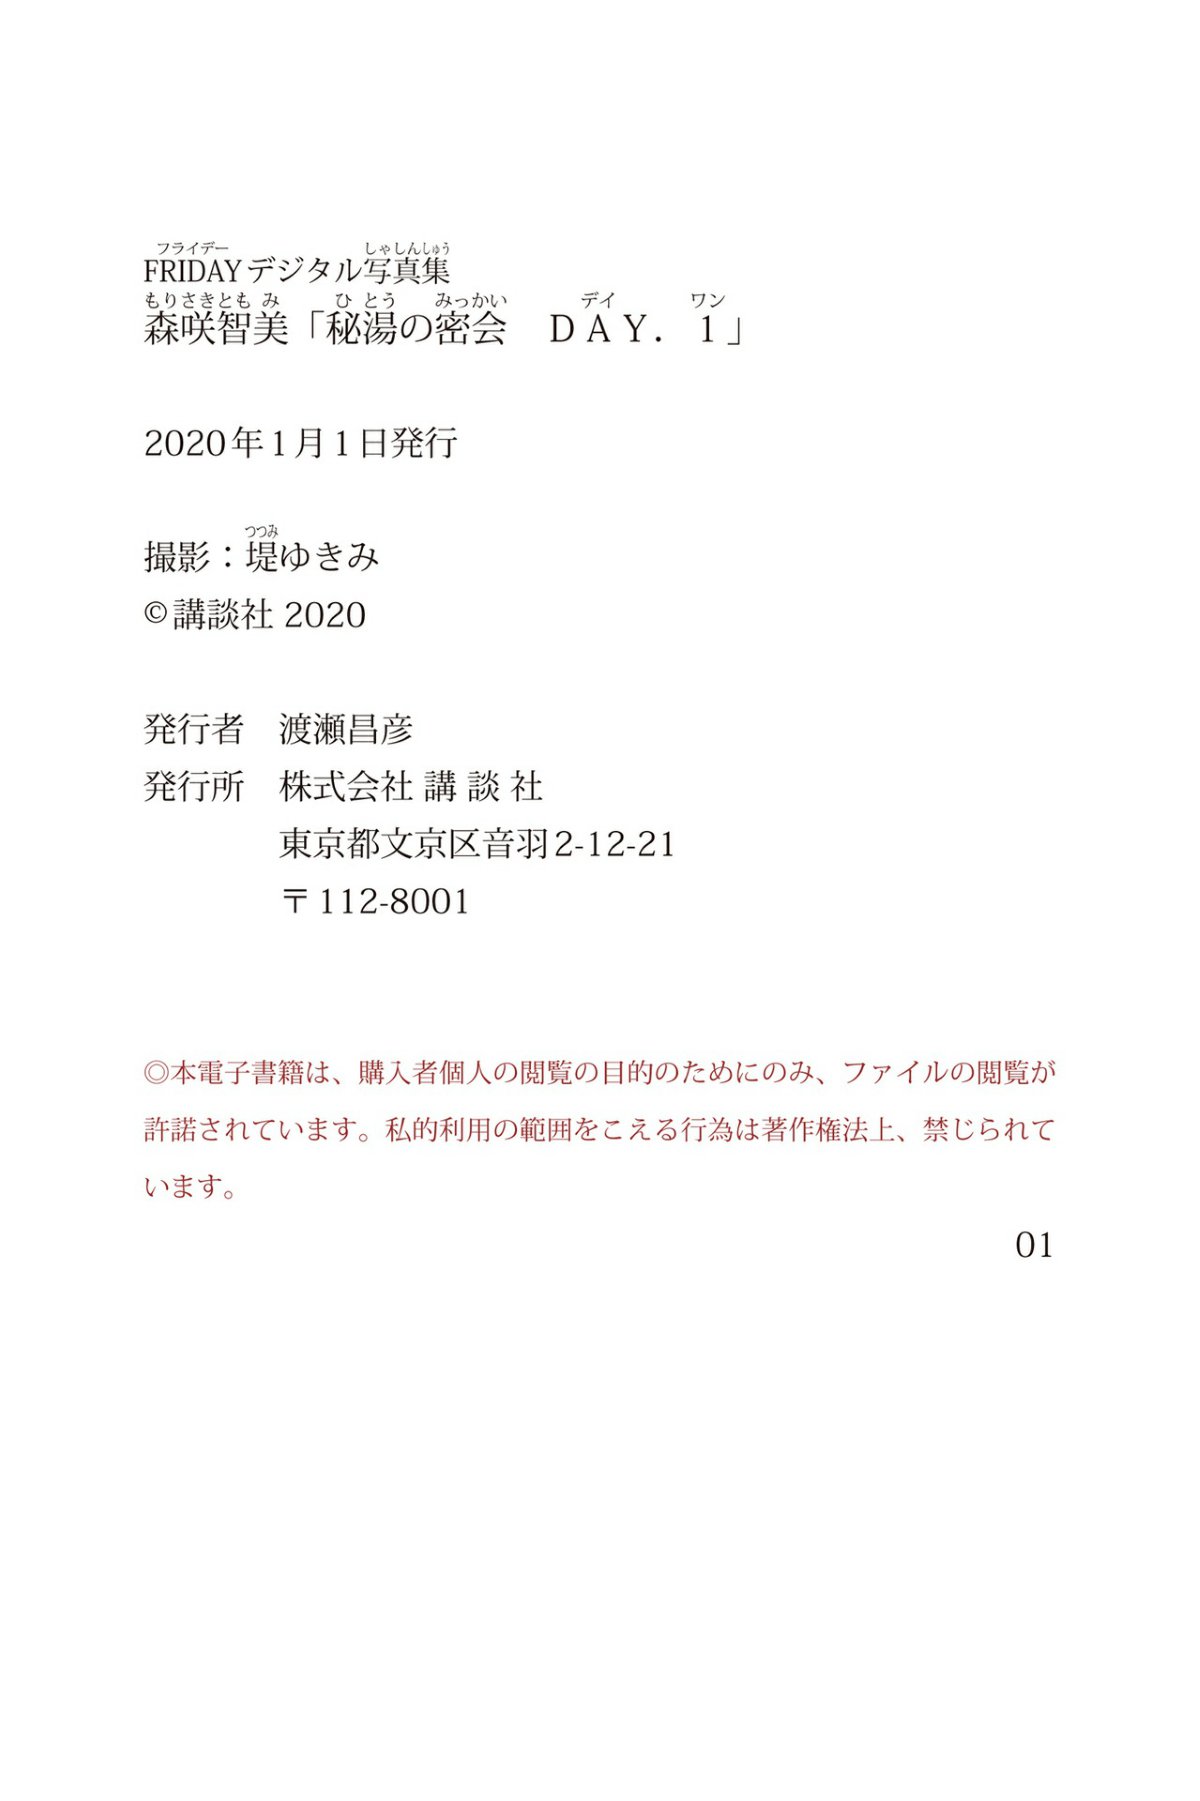 FRIDAY Digital Photobook Tomomi Morisaki 森咲智美 Secret meeting of secret hot spring DAY 1 秘湯の密会 DAY 1 2019 12 13 0073 5273599126.jpg